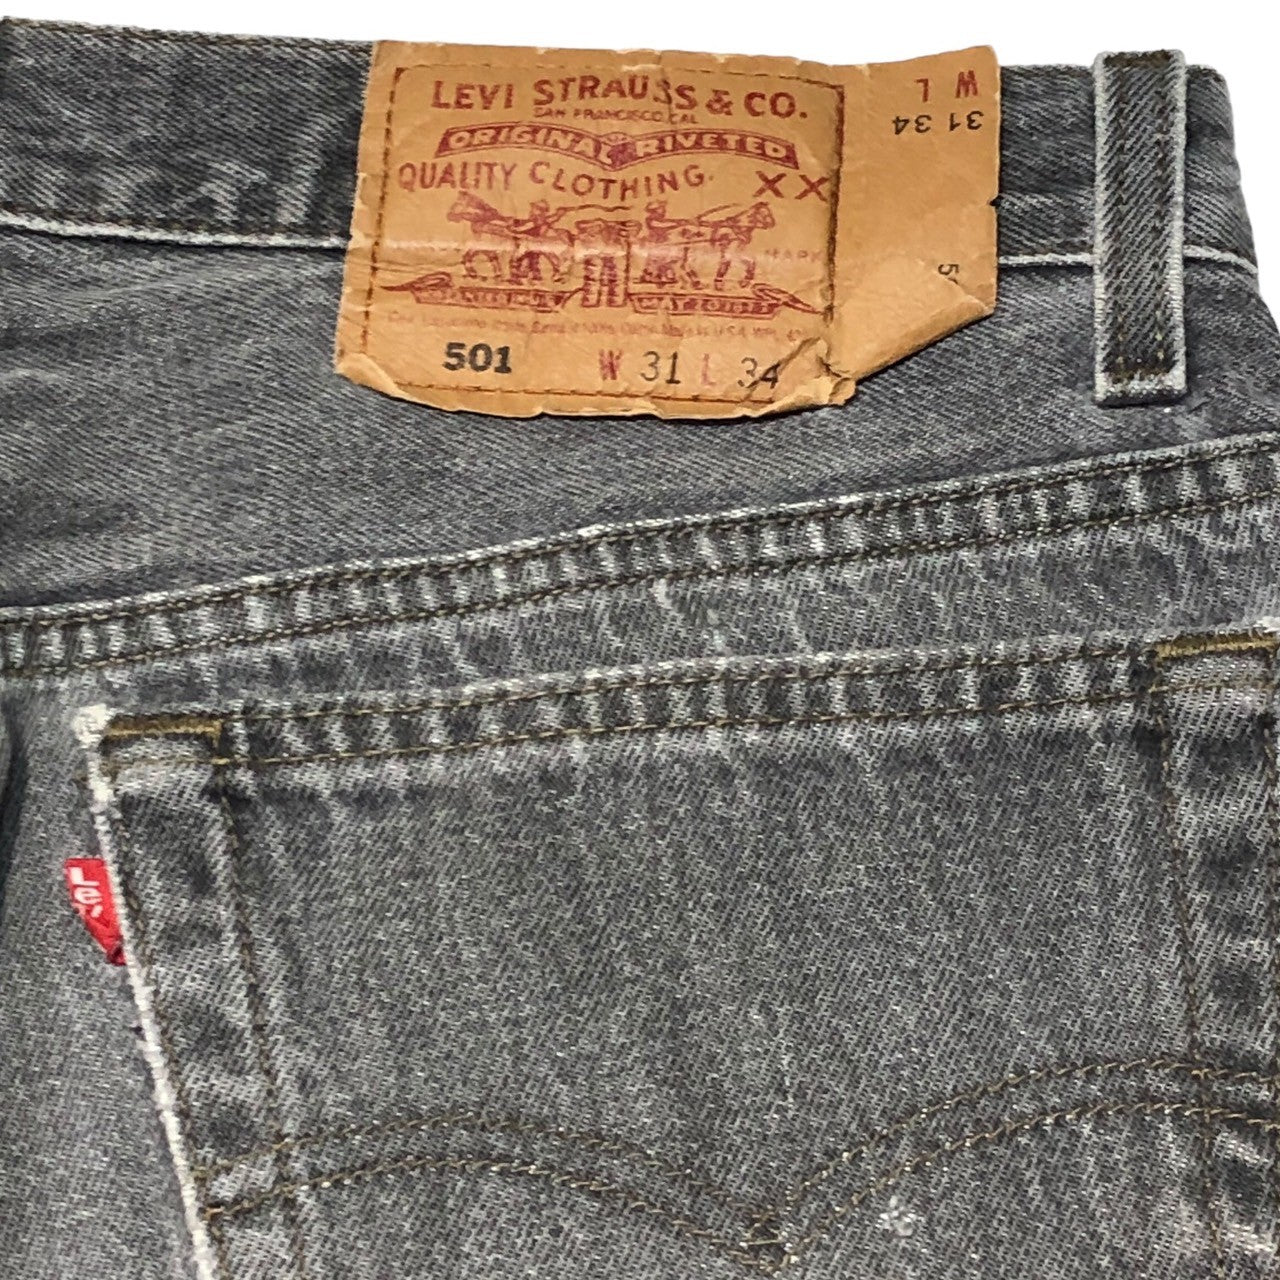 Levi's(リーバイス) 90's 501 black denim pants ブラック デニム パンツ 501-0658 W31 L34 グレー 先染め 1998年製造 USA製 90年代 ヴィンテージ